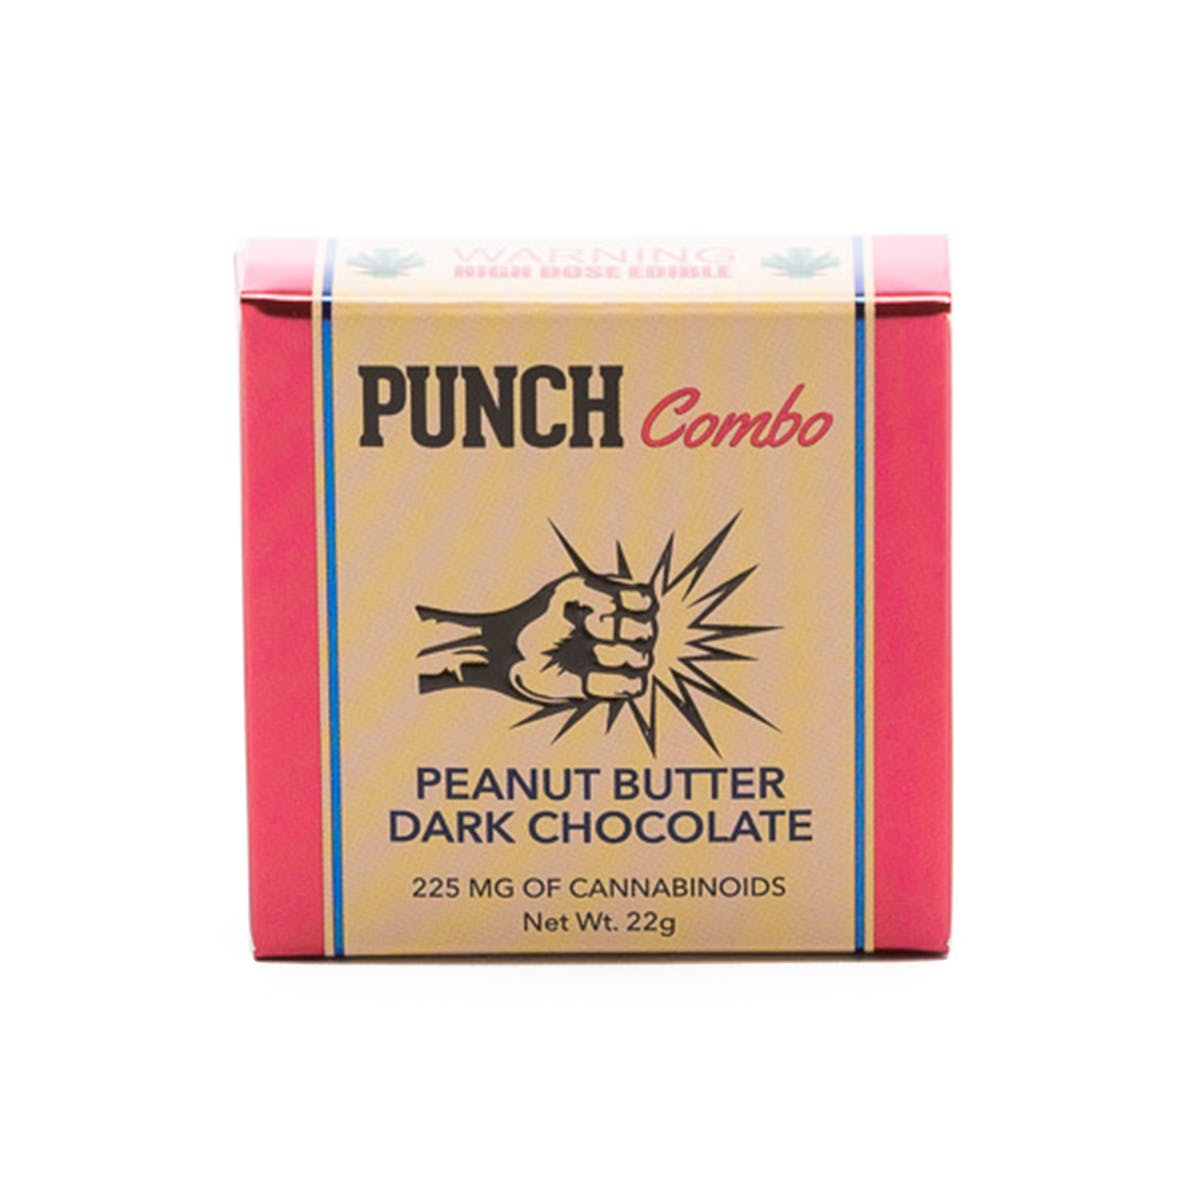 Peanut Butter Dark Chocolate COMBO, 225